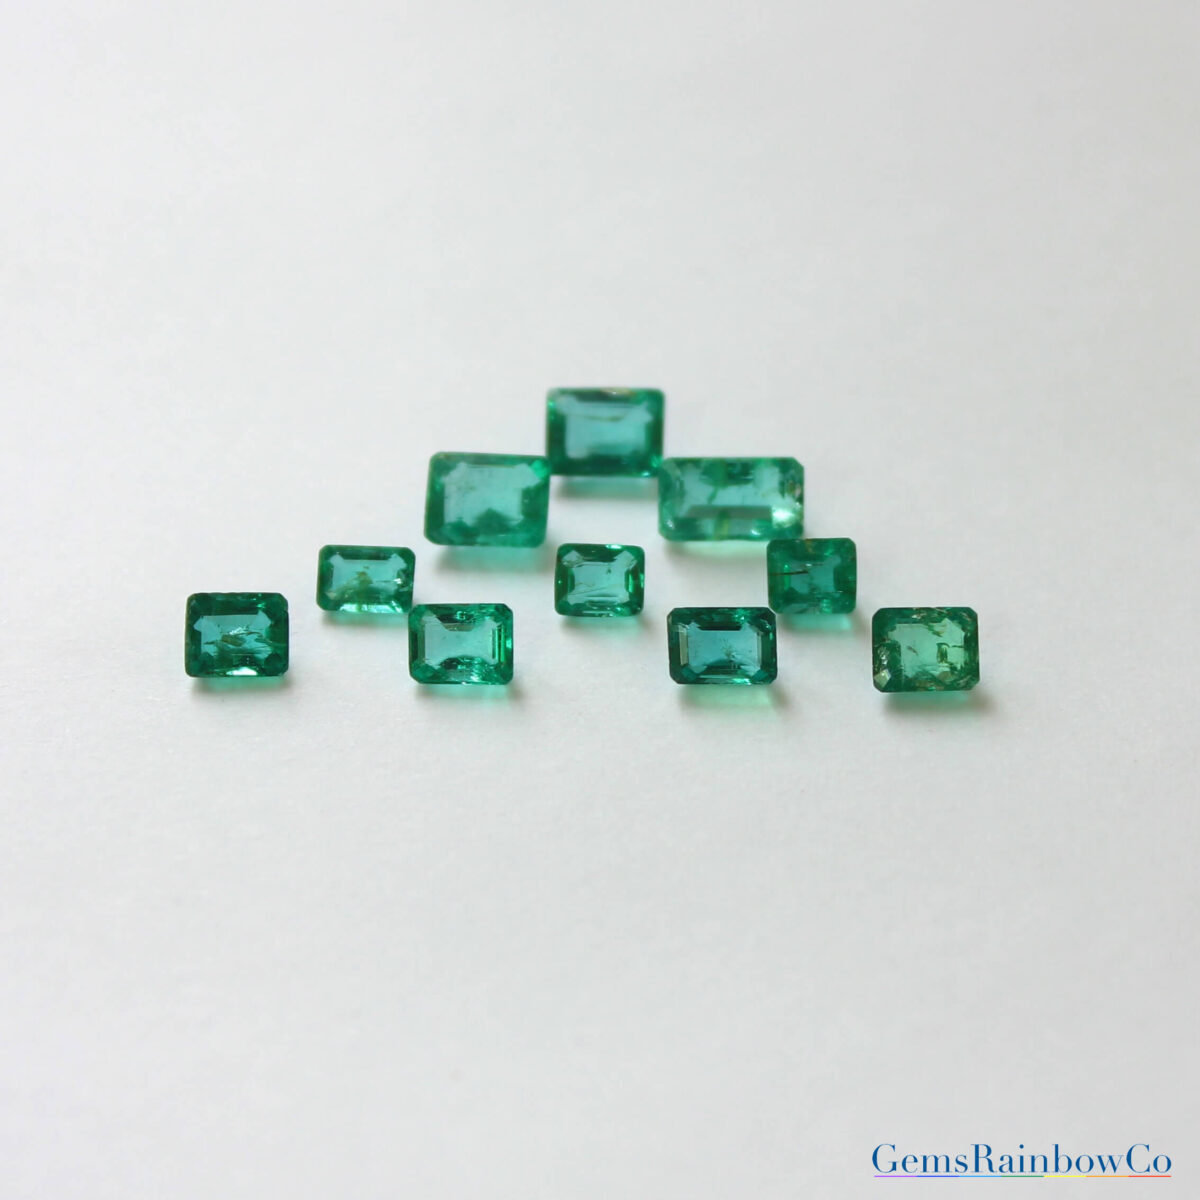 Emerald Octagon